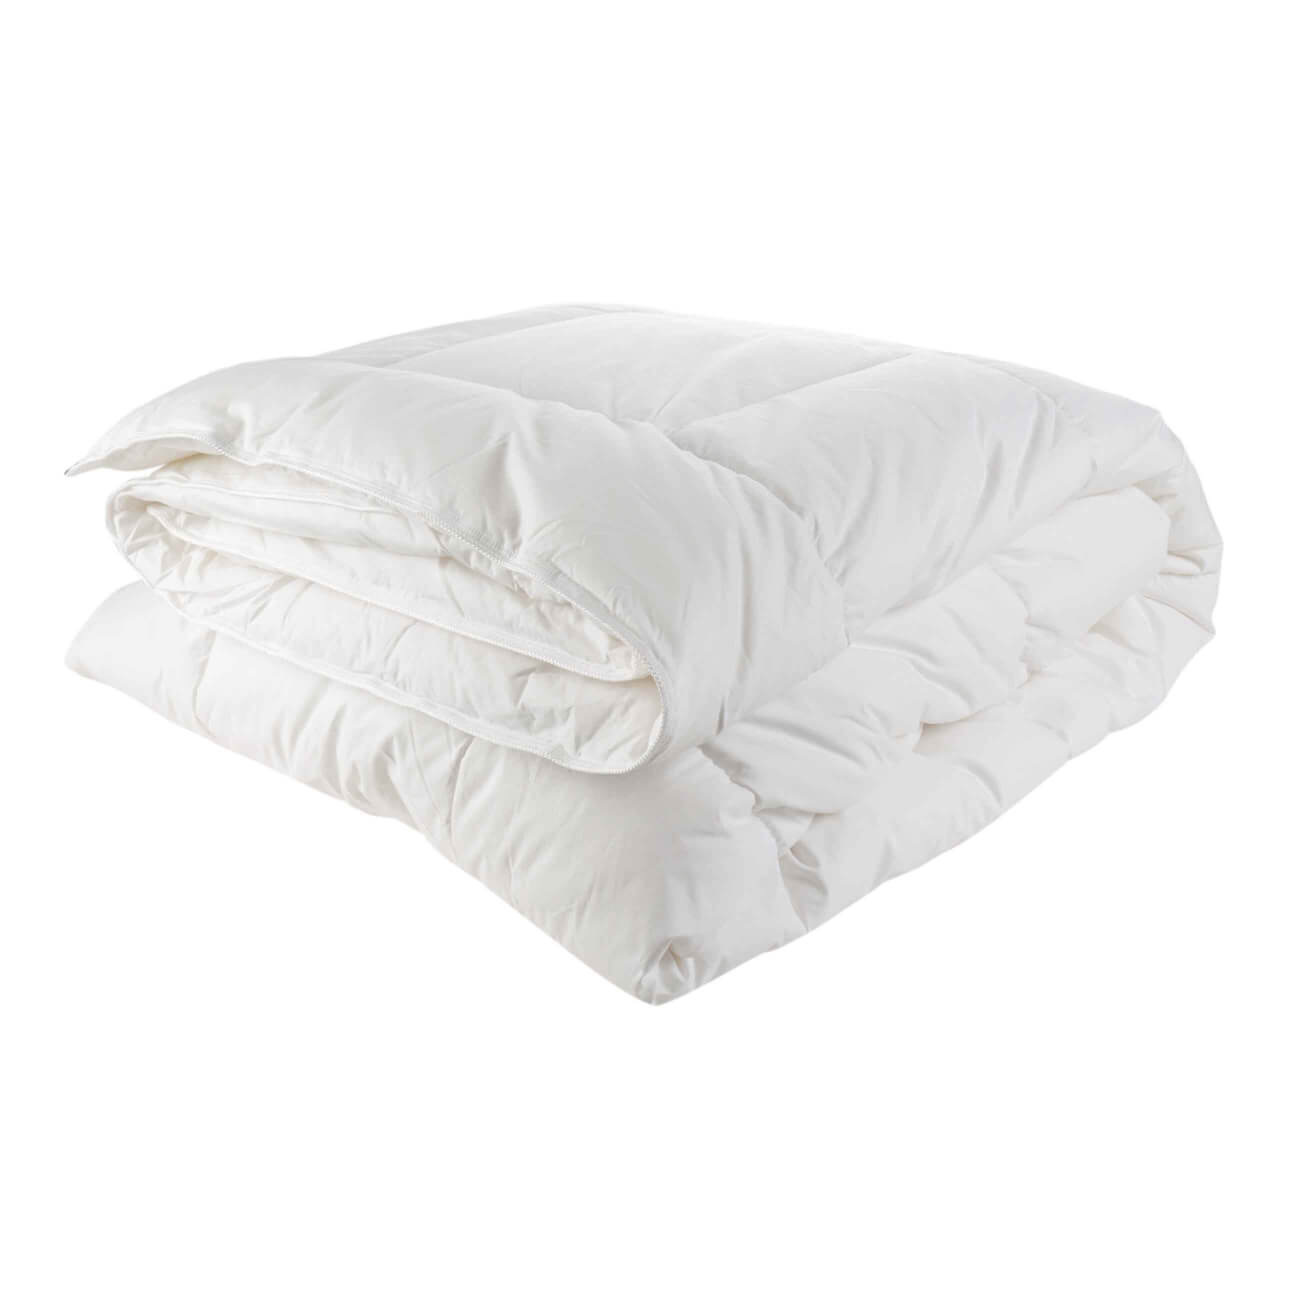 Одеяло, 200х220 см, хлопок/микрофибра, Soft cotton одеяло 200х220 см микрофибра дакрон молочное cloud fiber